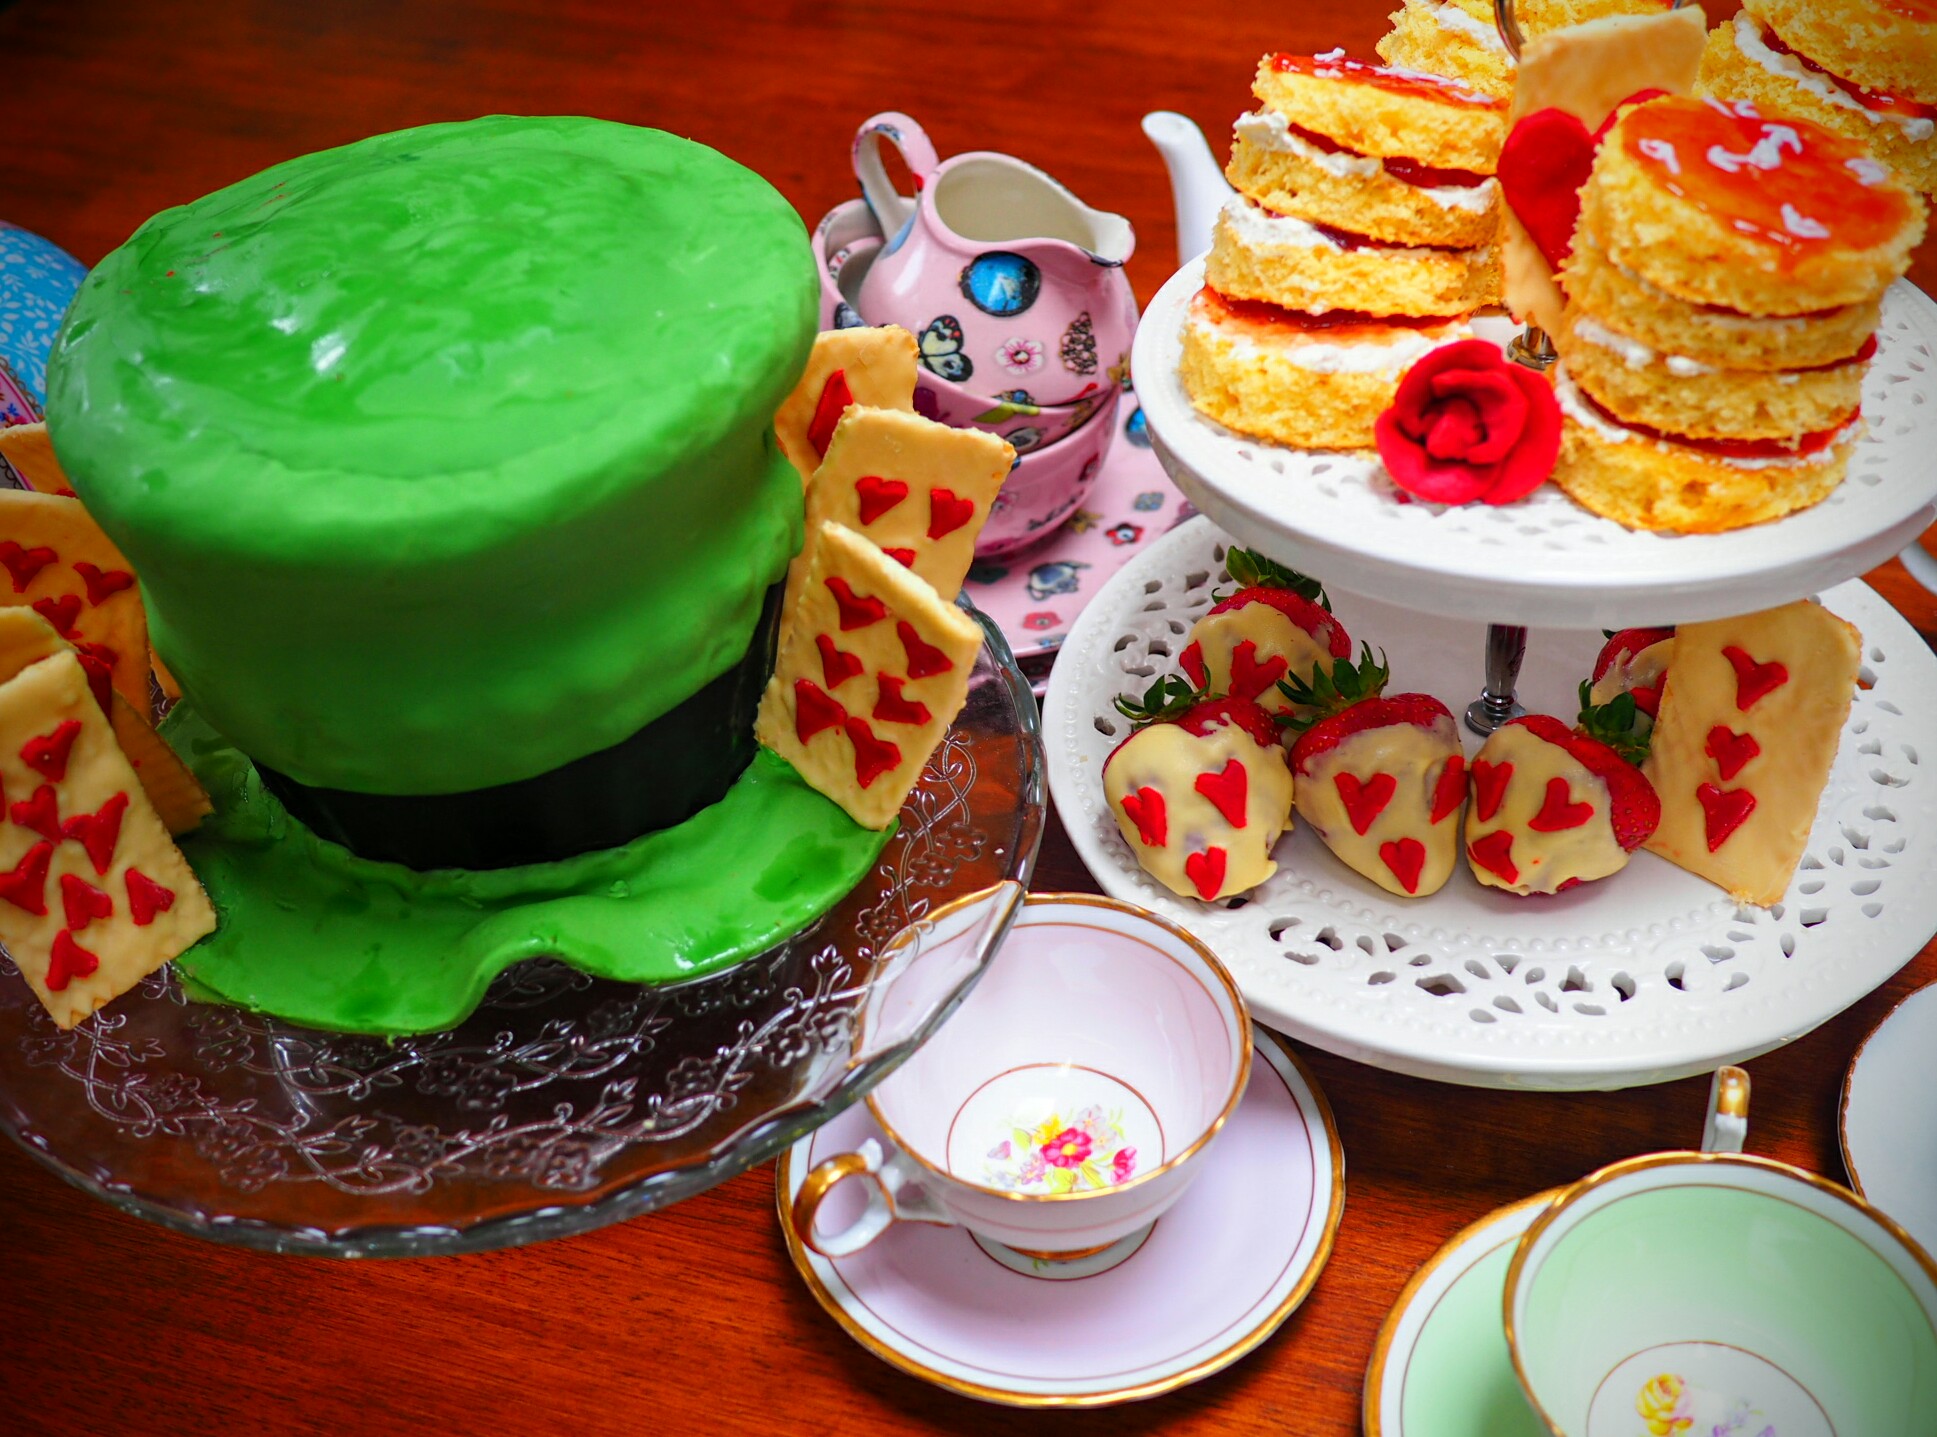 Alice in Wonderland themed afternoon tea